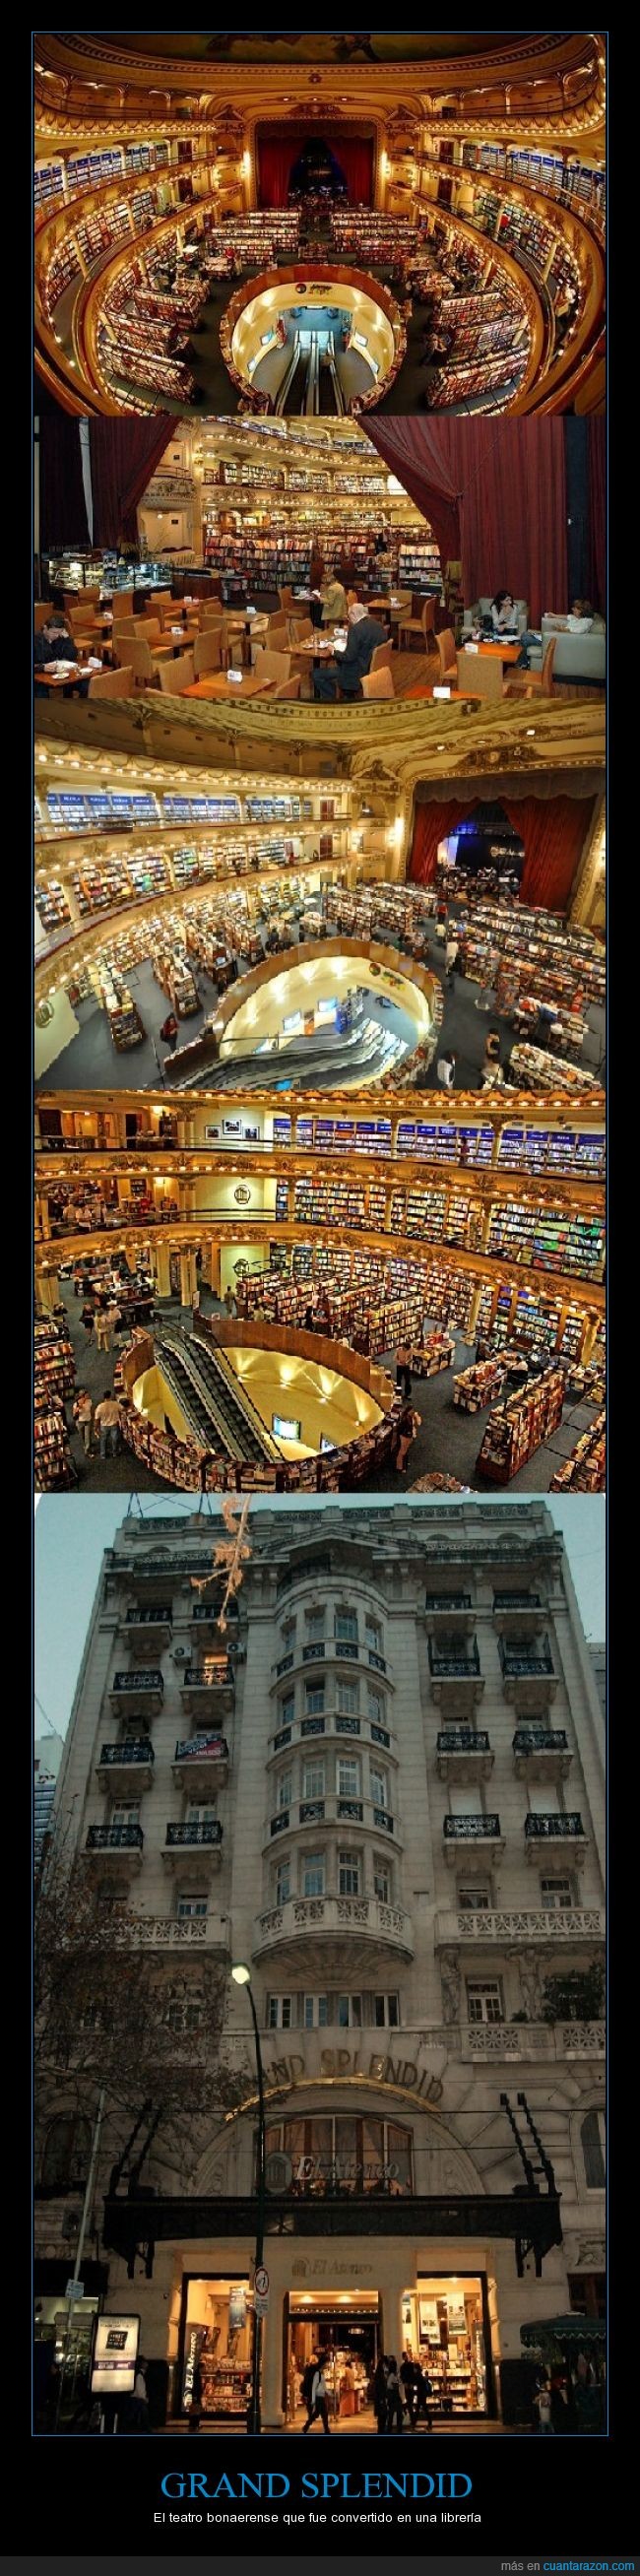 teatro,libreria,grand,splendid,Buenos Aires,convertido,libros,Ateneo,cultura,yenny